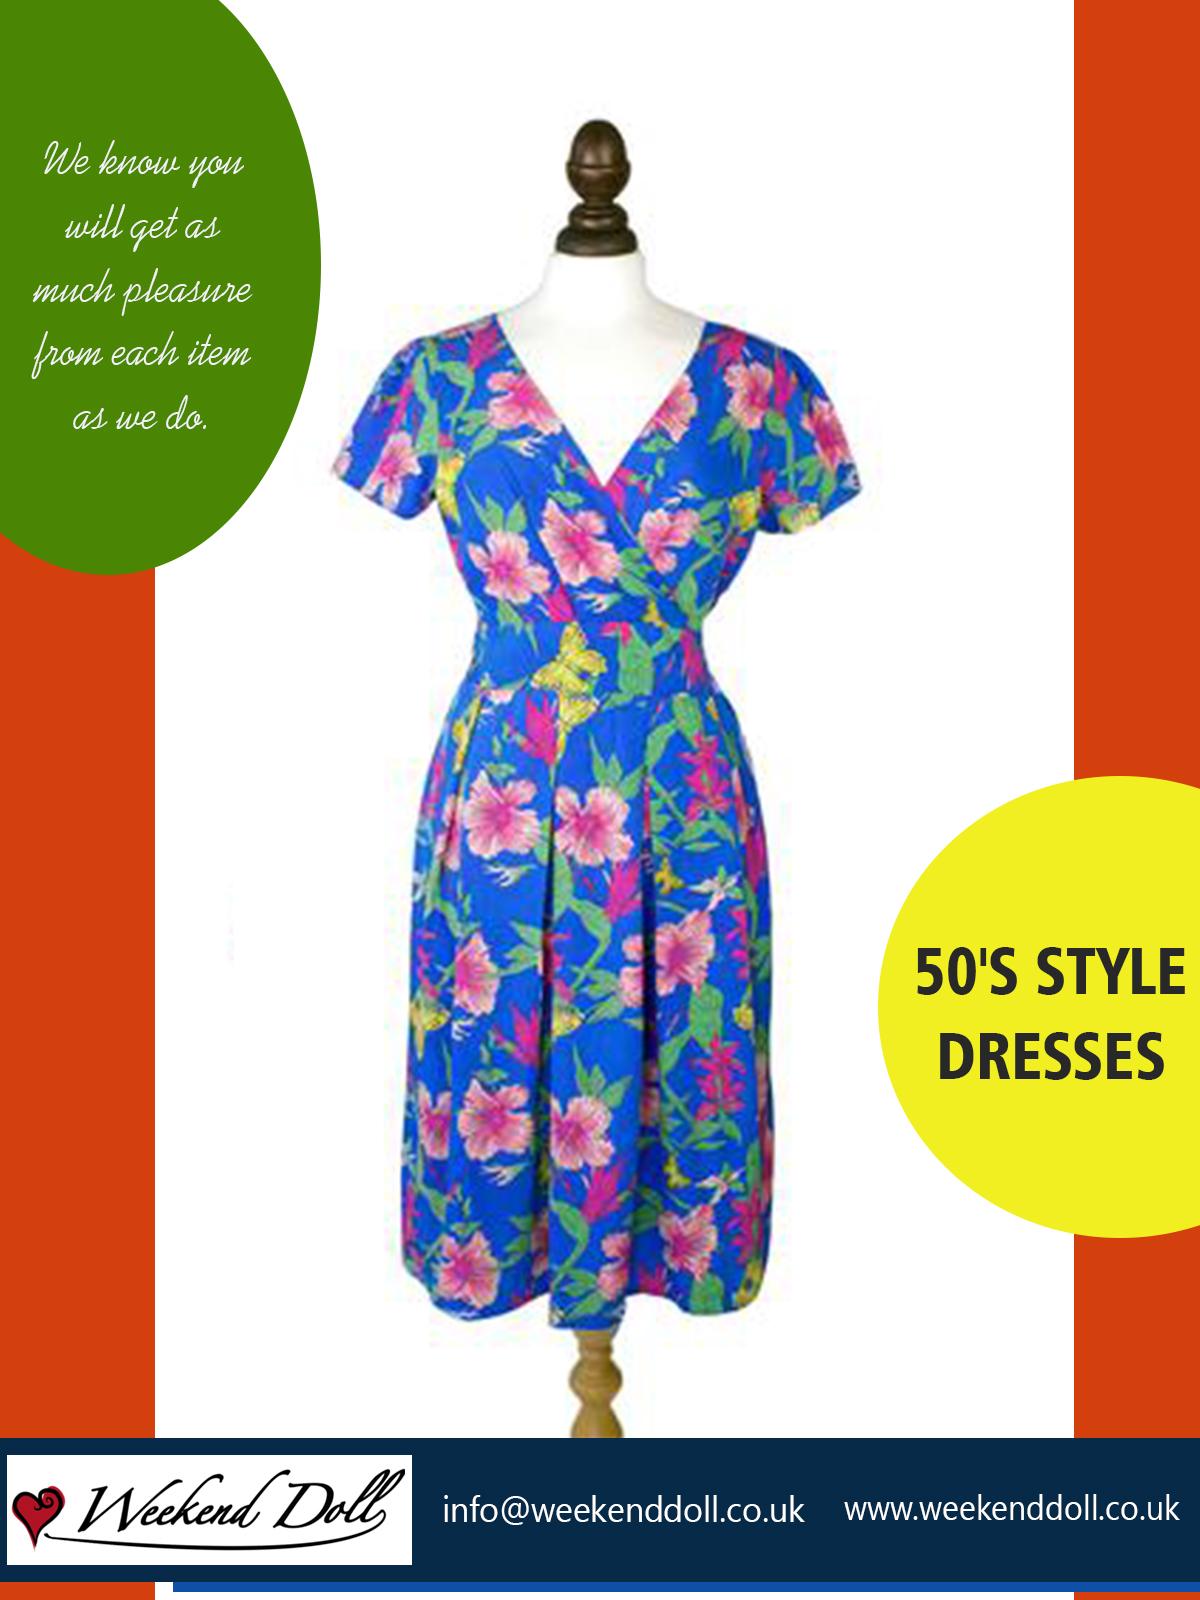 50's style dresses